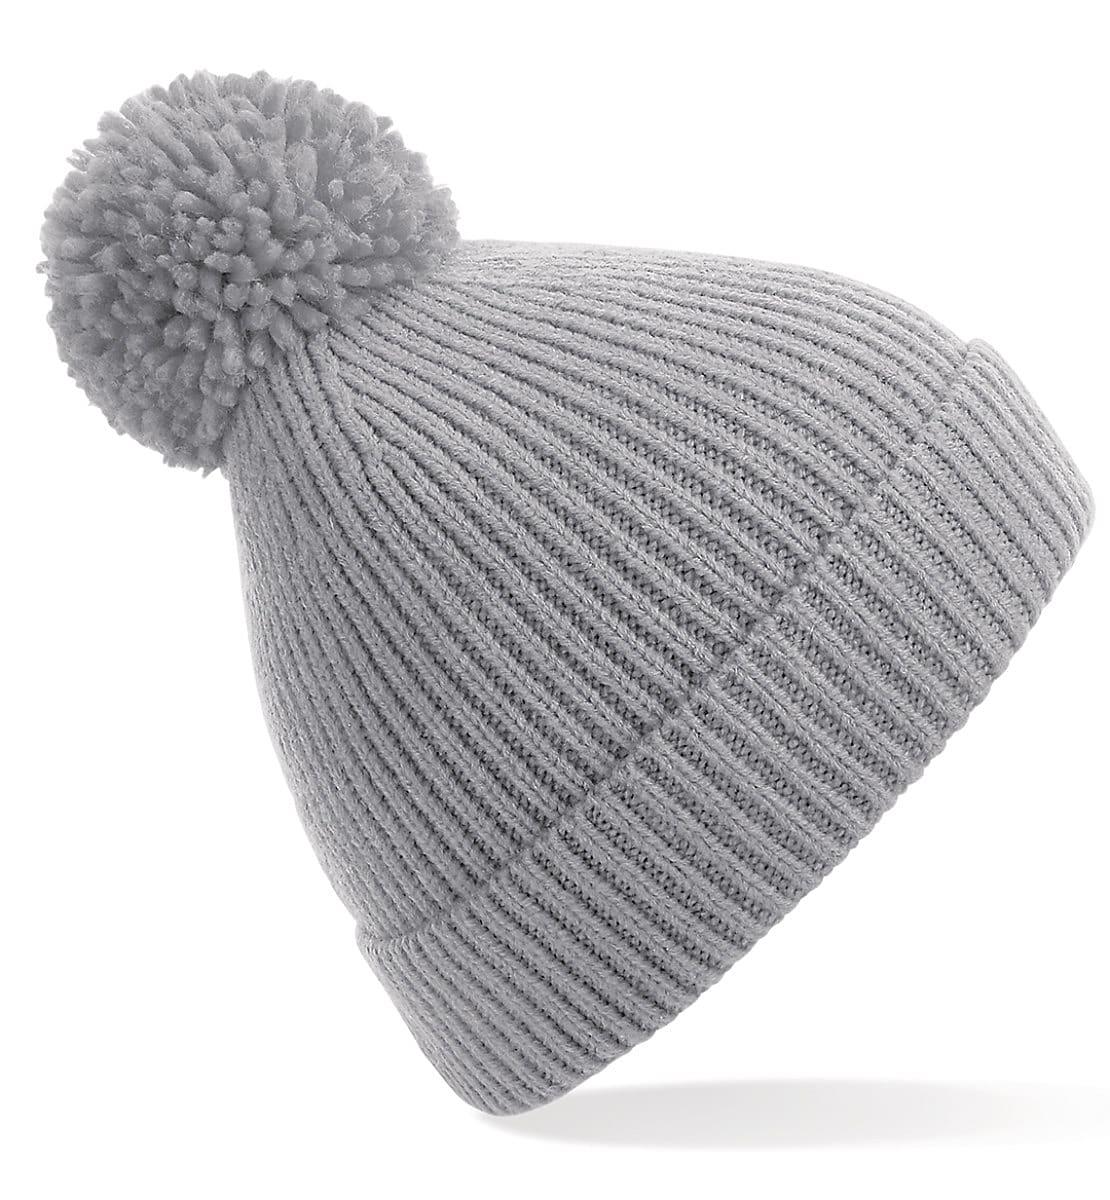 Beechfield Knit Ribbed Pom Pom Beanie Hat in Light Grey (Product Code: B382)